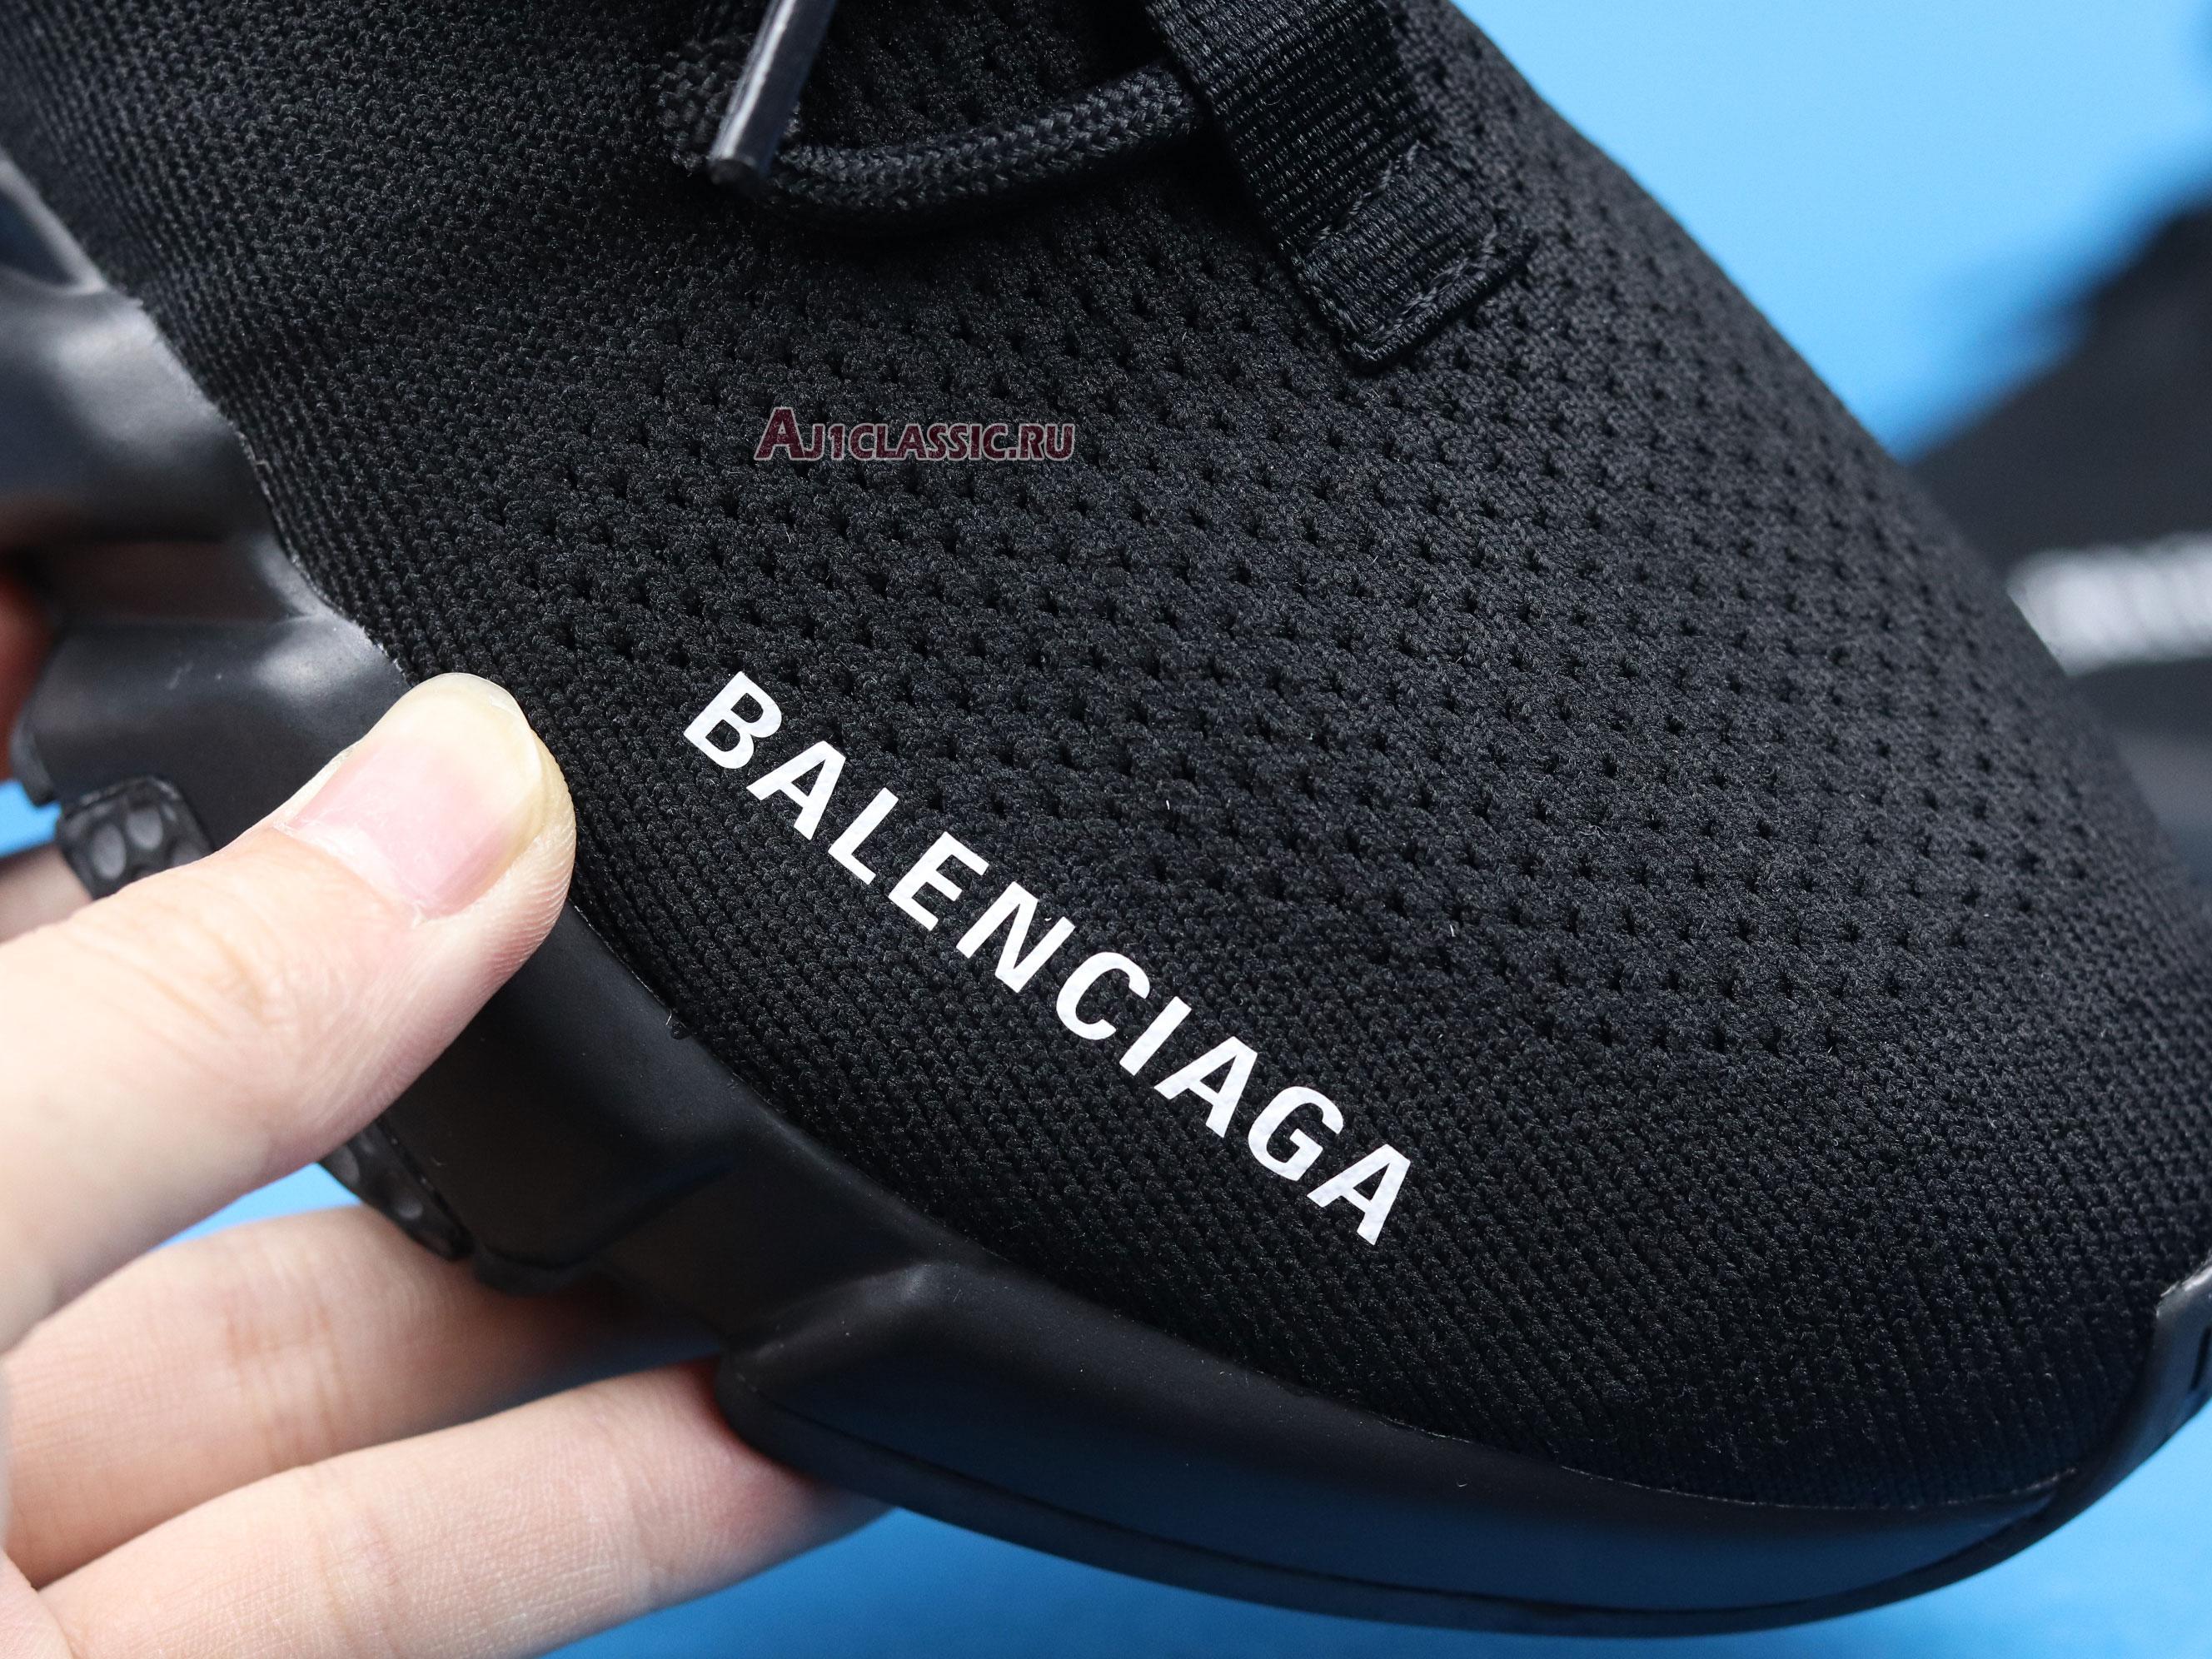 Balenciaga Speed Lace-Up Sneaker "Black" 587289 W2DB1 1013